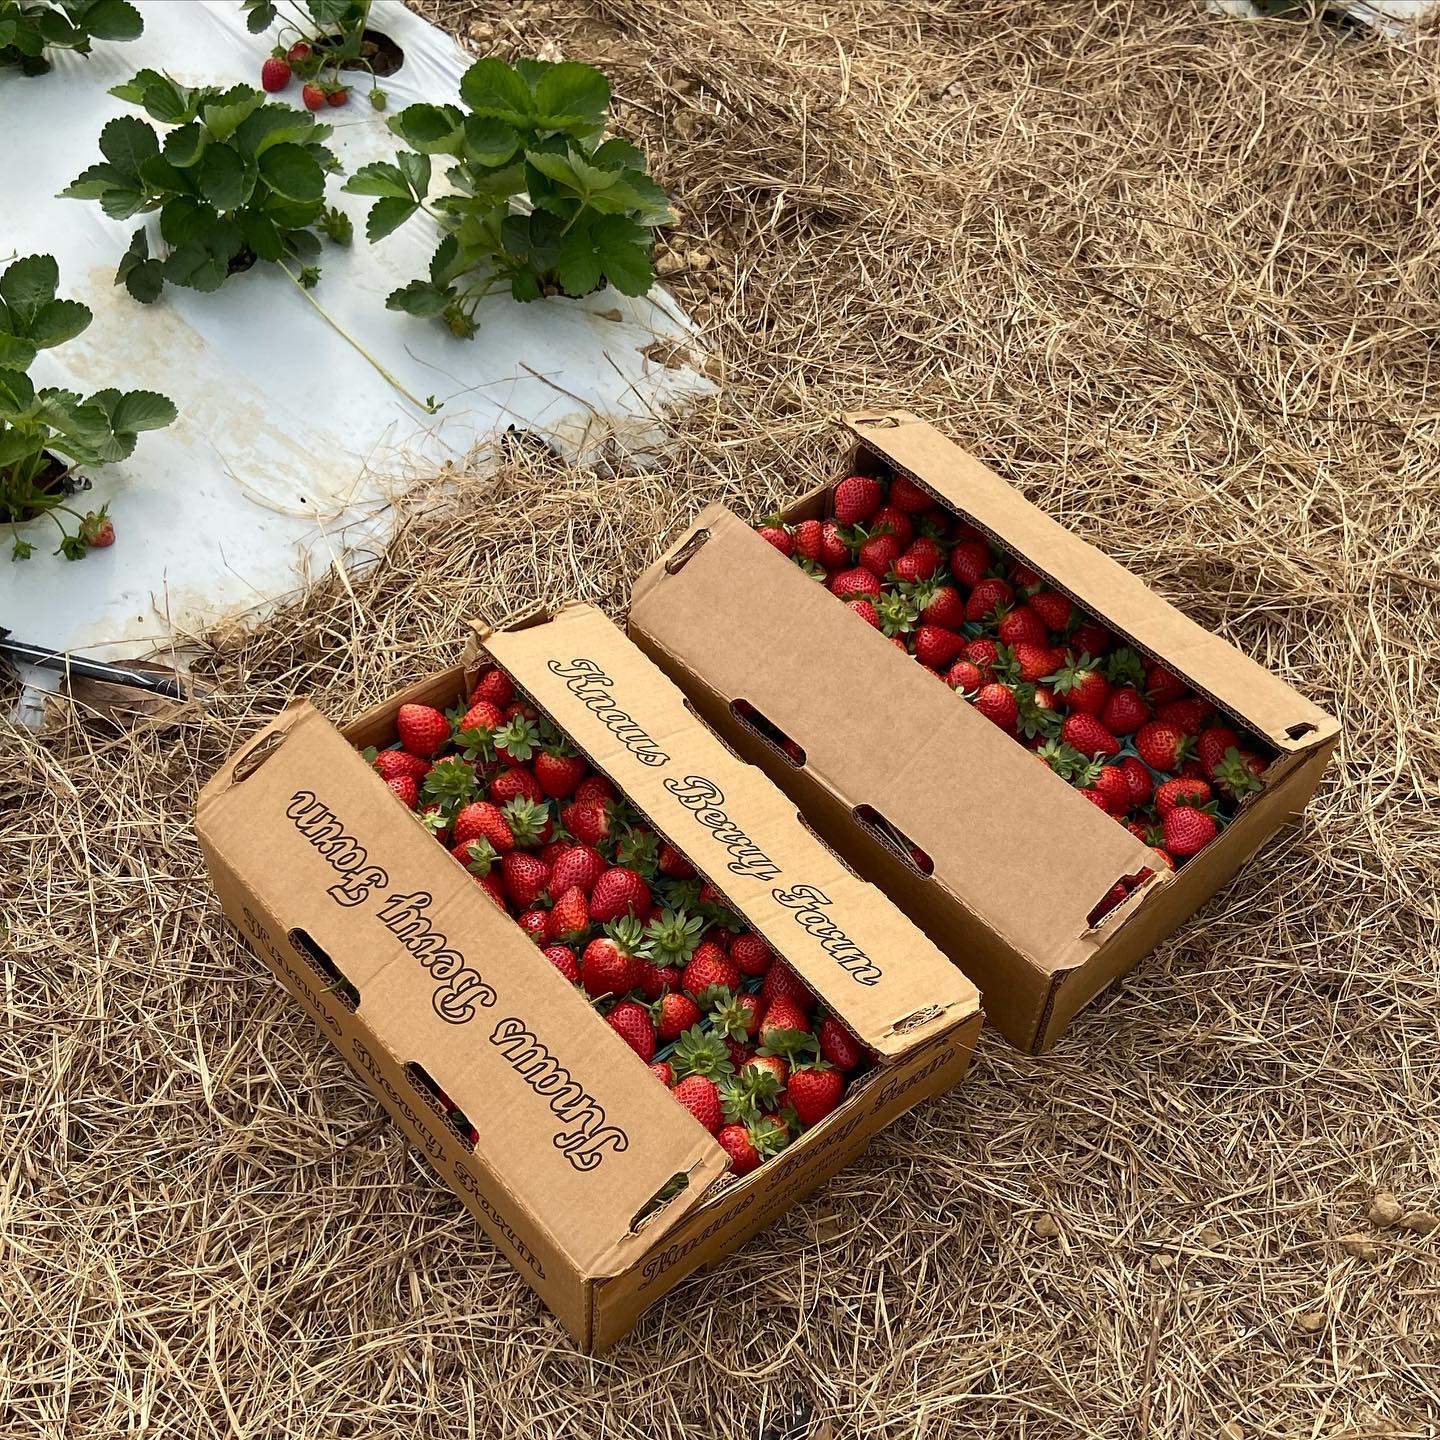 Strawberry picking at Knaus Berry Farm